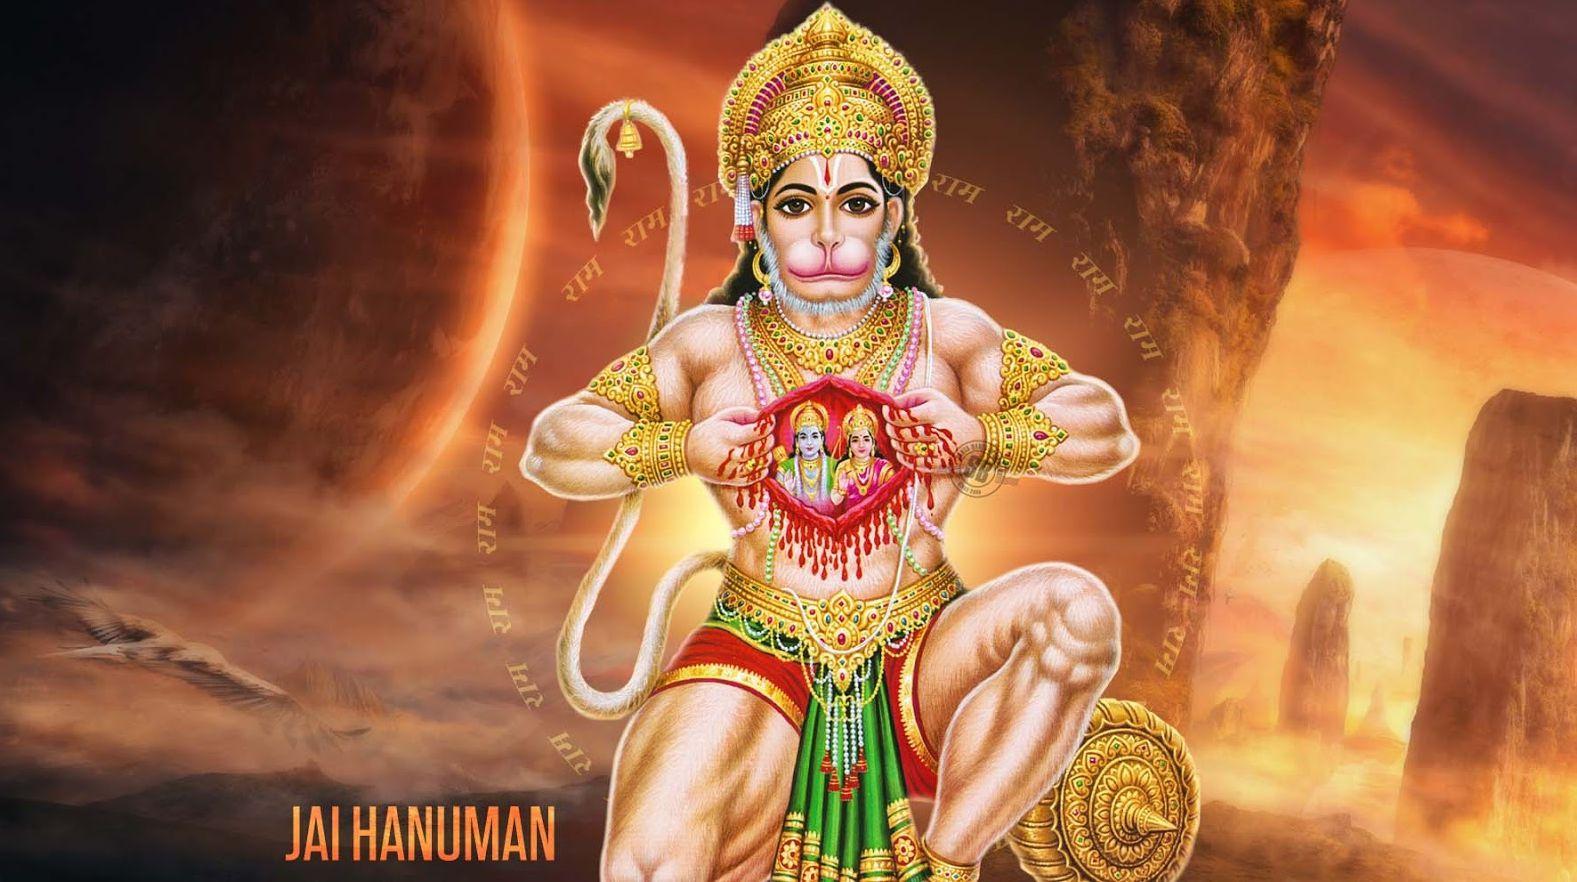 Download Free HD Wallpaper of Bhagwan Shree Hanuman. Bajrangbali